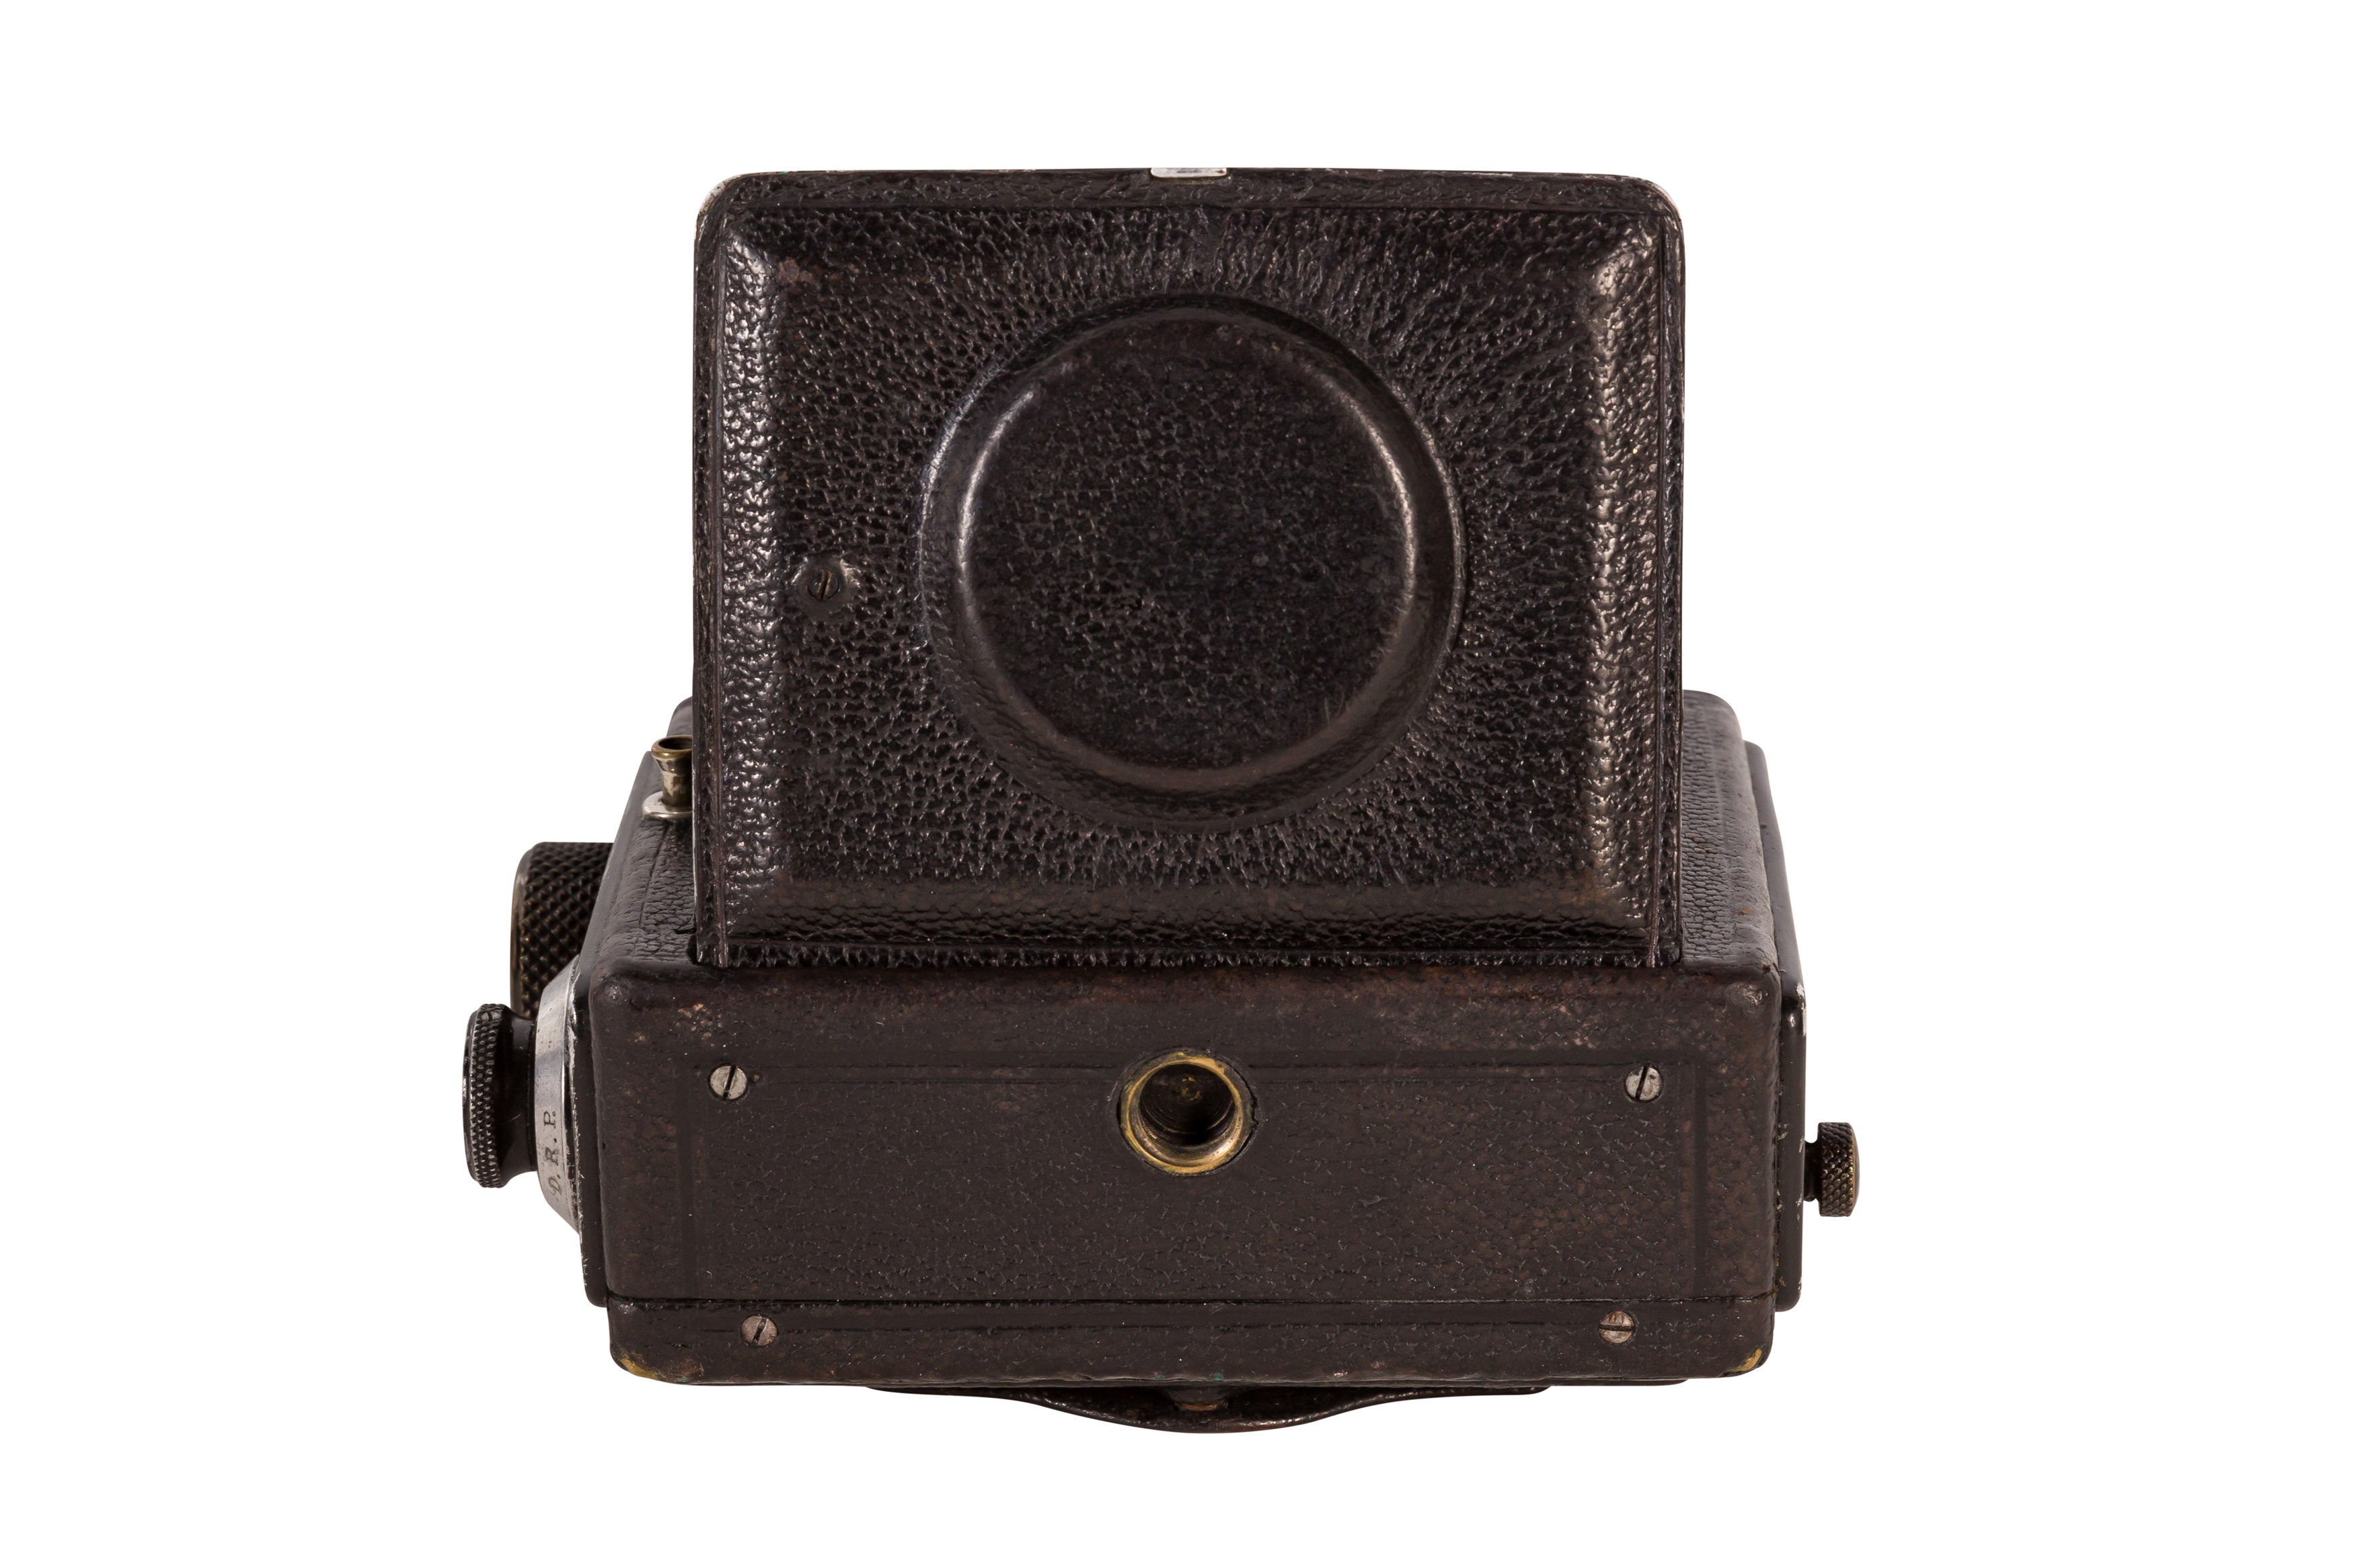 A Ernemann V.P Miniature Klapp Camera - Image 5 of 6